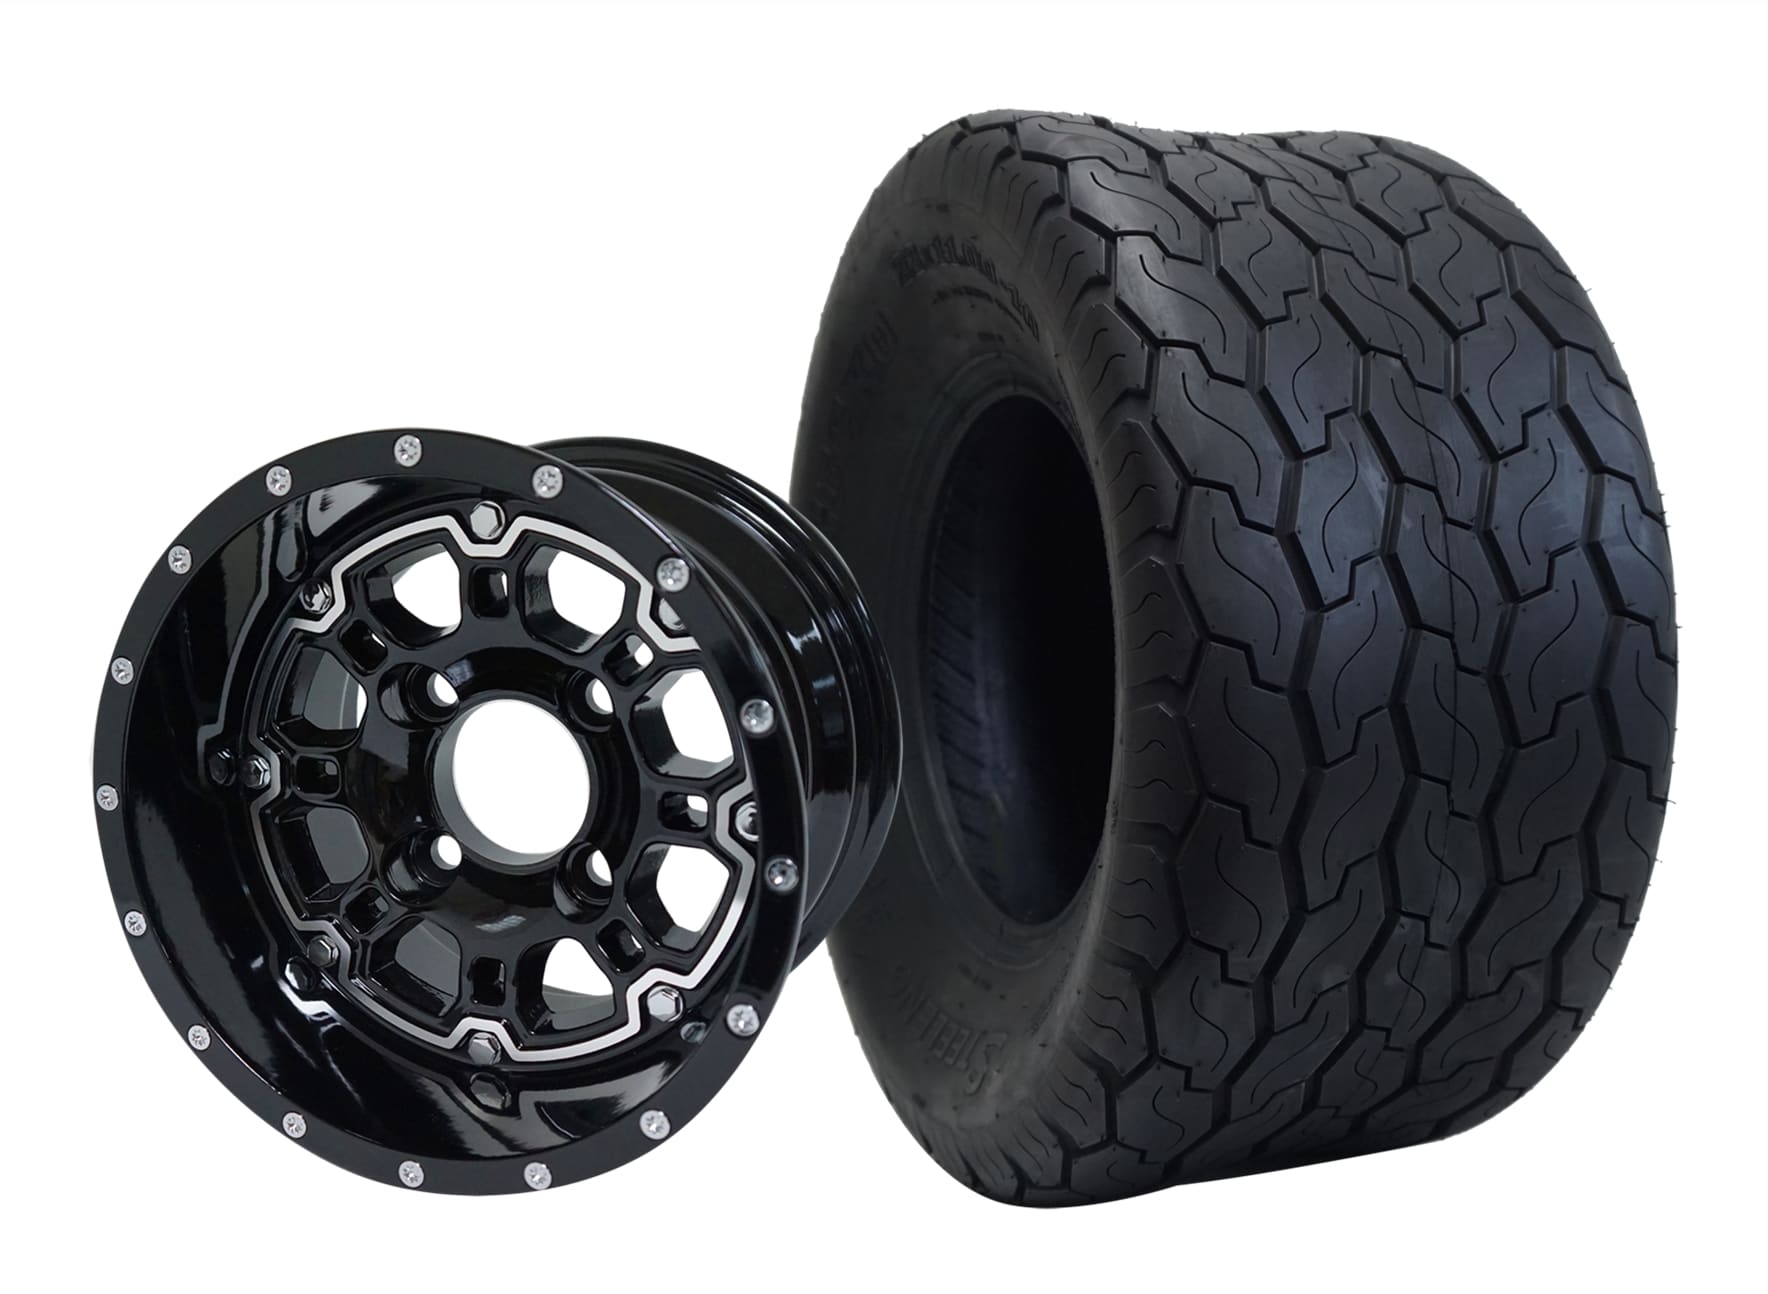 BNDL-TR1001-WH1007-CC0002-LN0005 10" Panther Glossy Black Wheel Aluminum Alloy & 18"x9"-10" Gecko All Terrain Tire x4